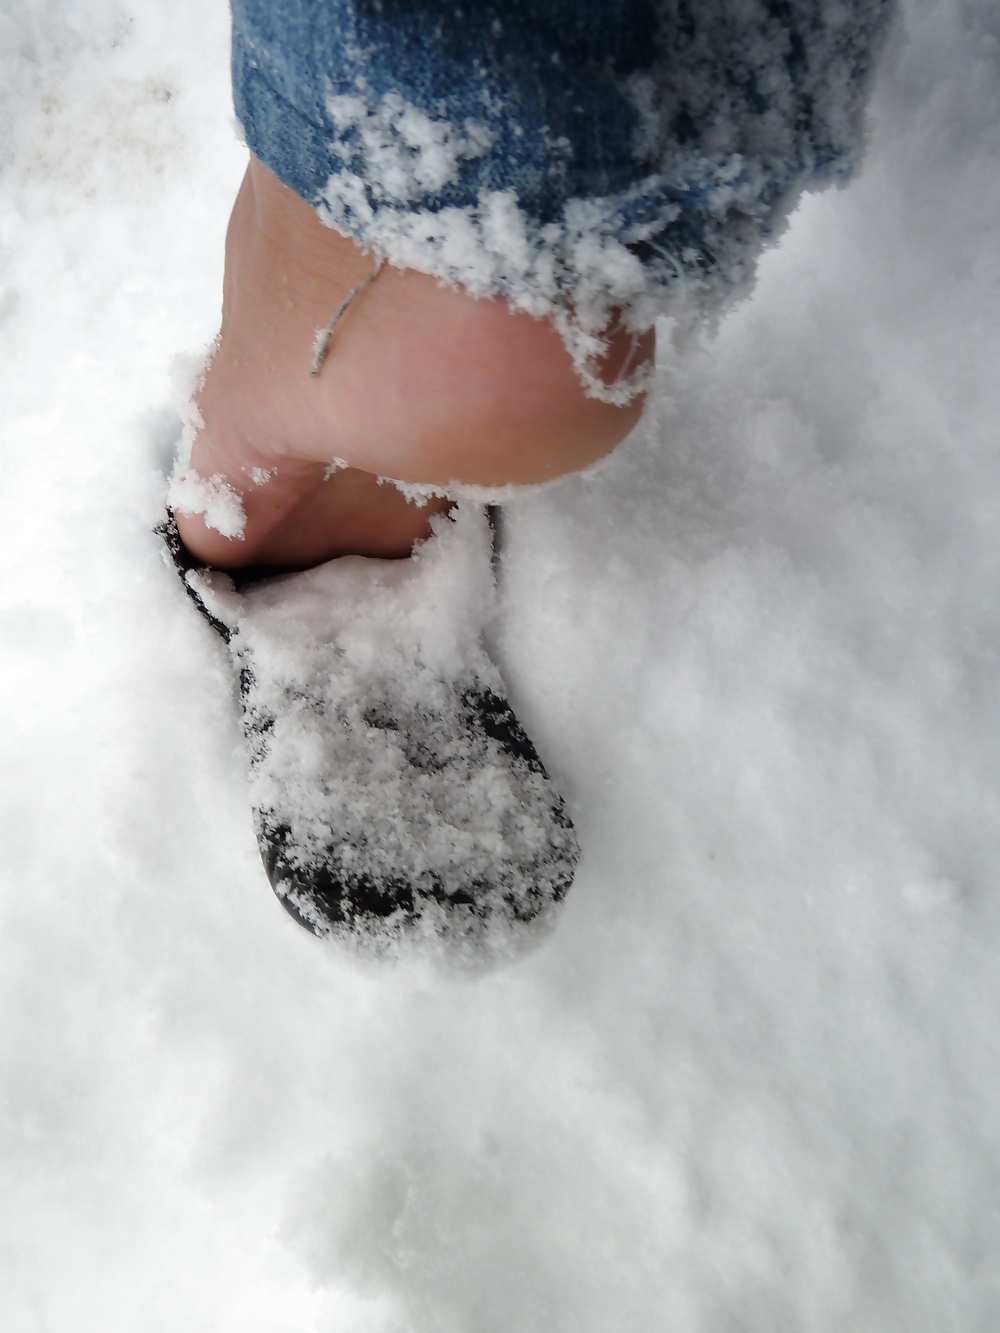 Feet in snow #6267247